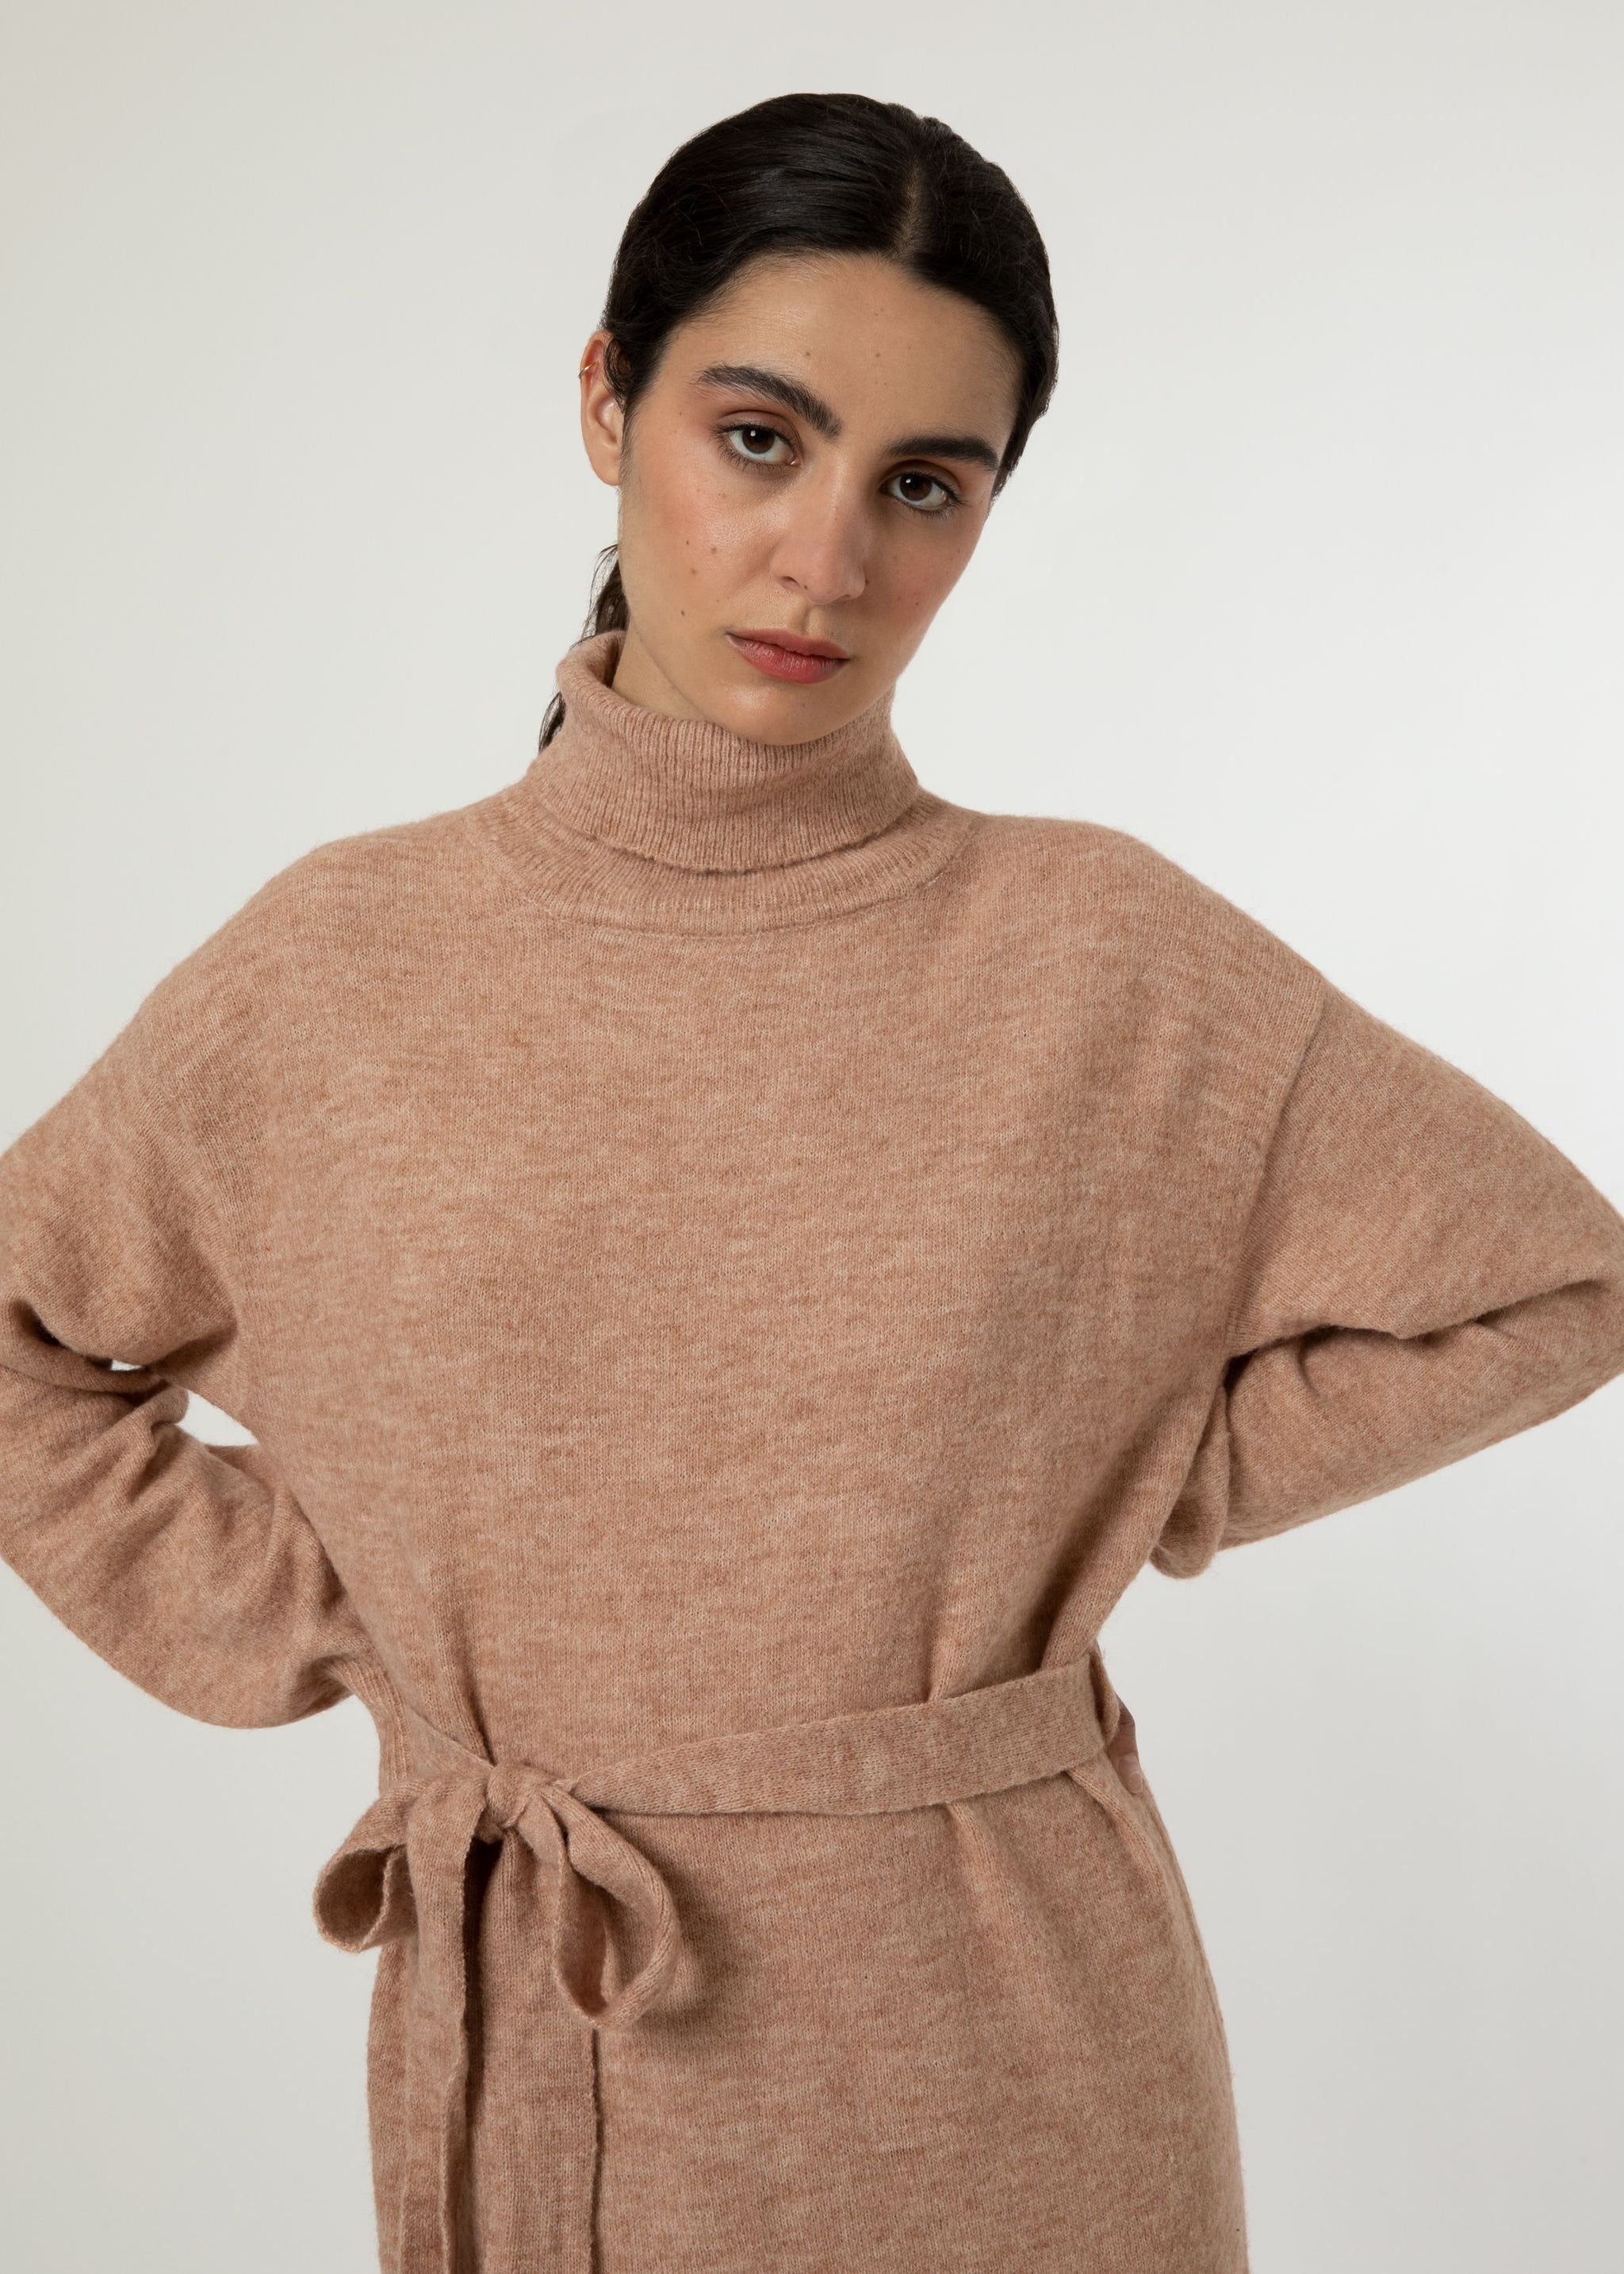 FRNCH Camel Turtleneck Sweater Dress